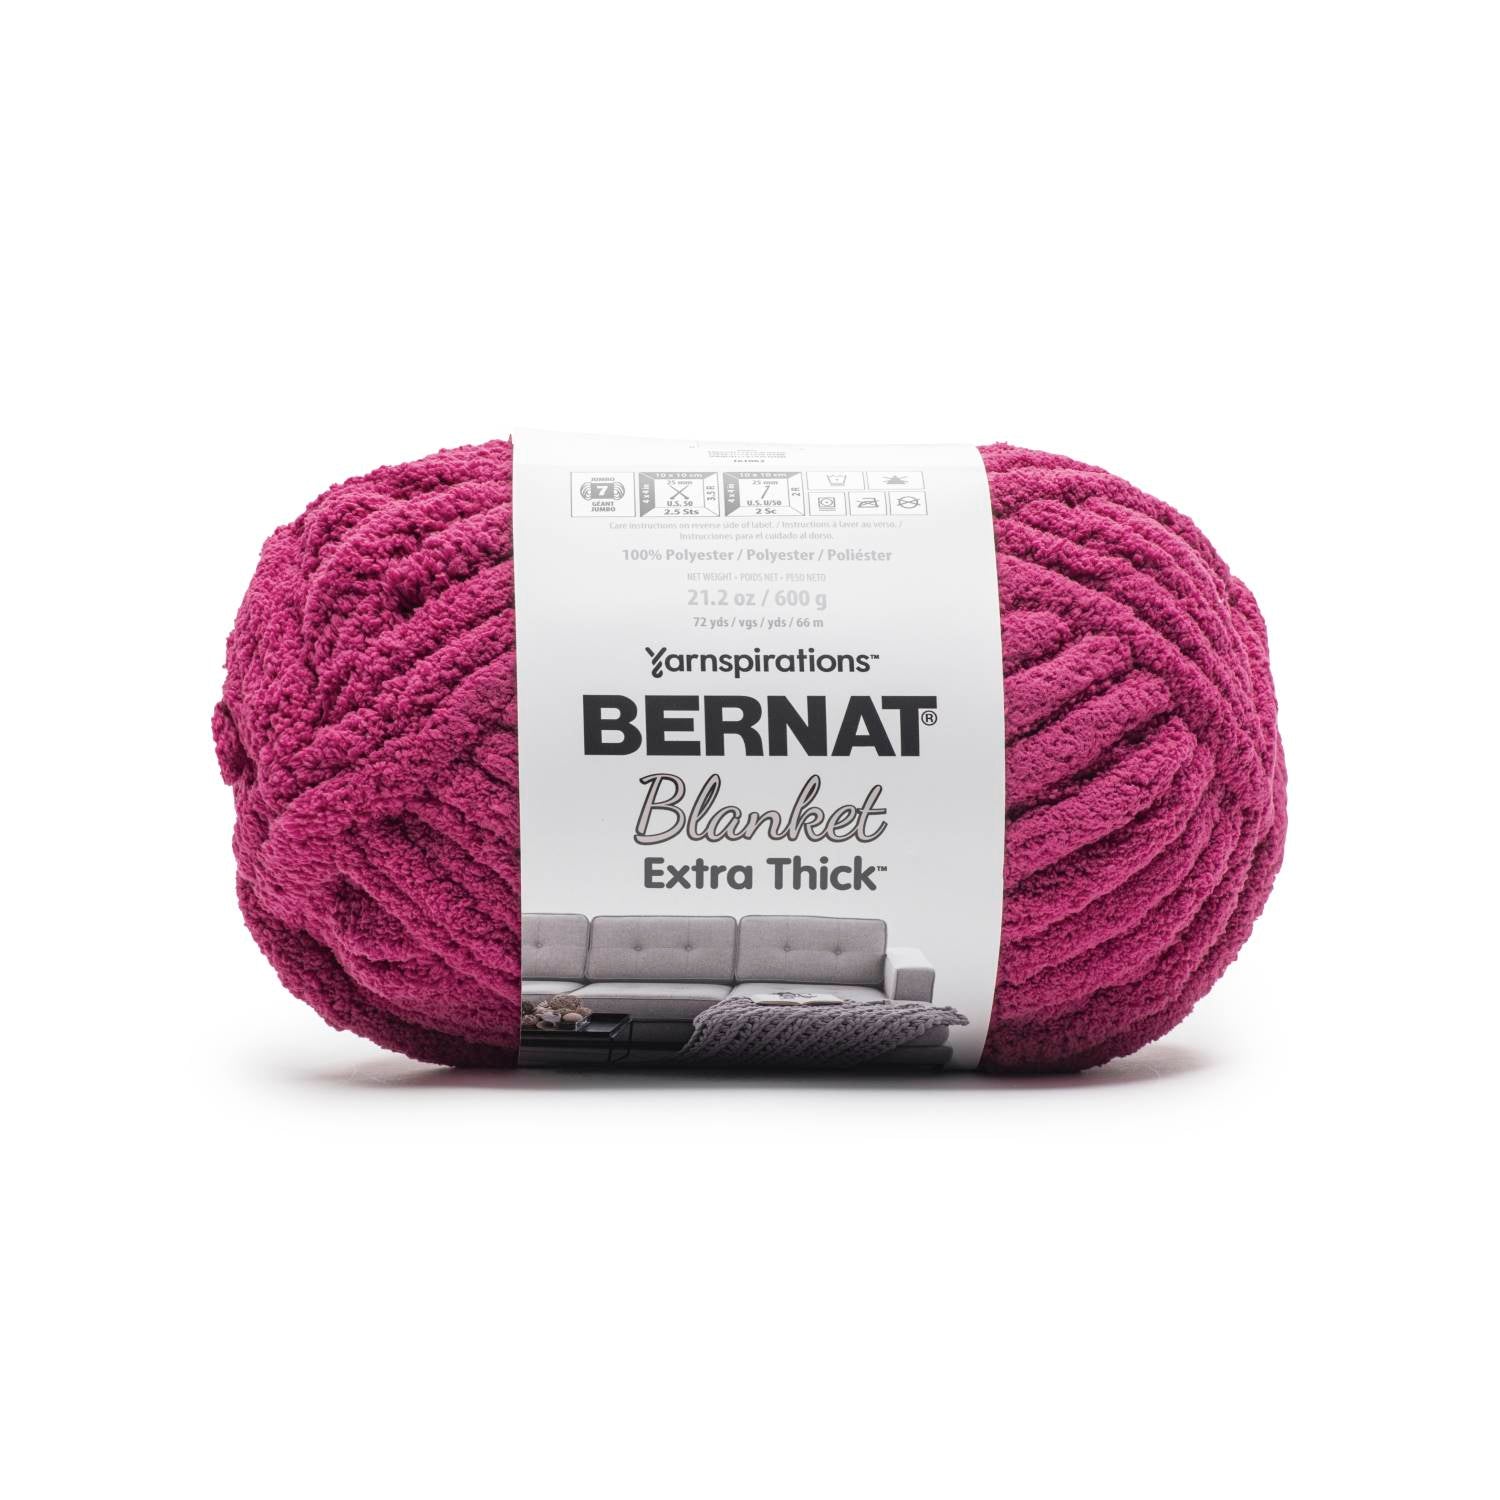 Bernat Blanket Extra Thick Yarn (600g/21.2oz) - Discontinued Shades Fucshia